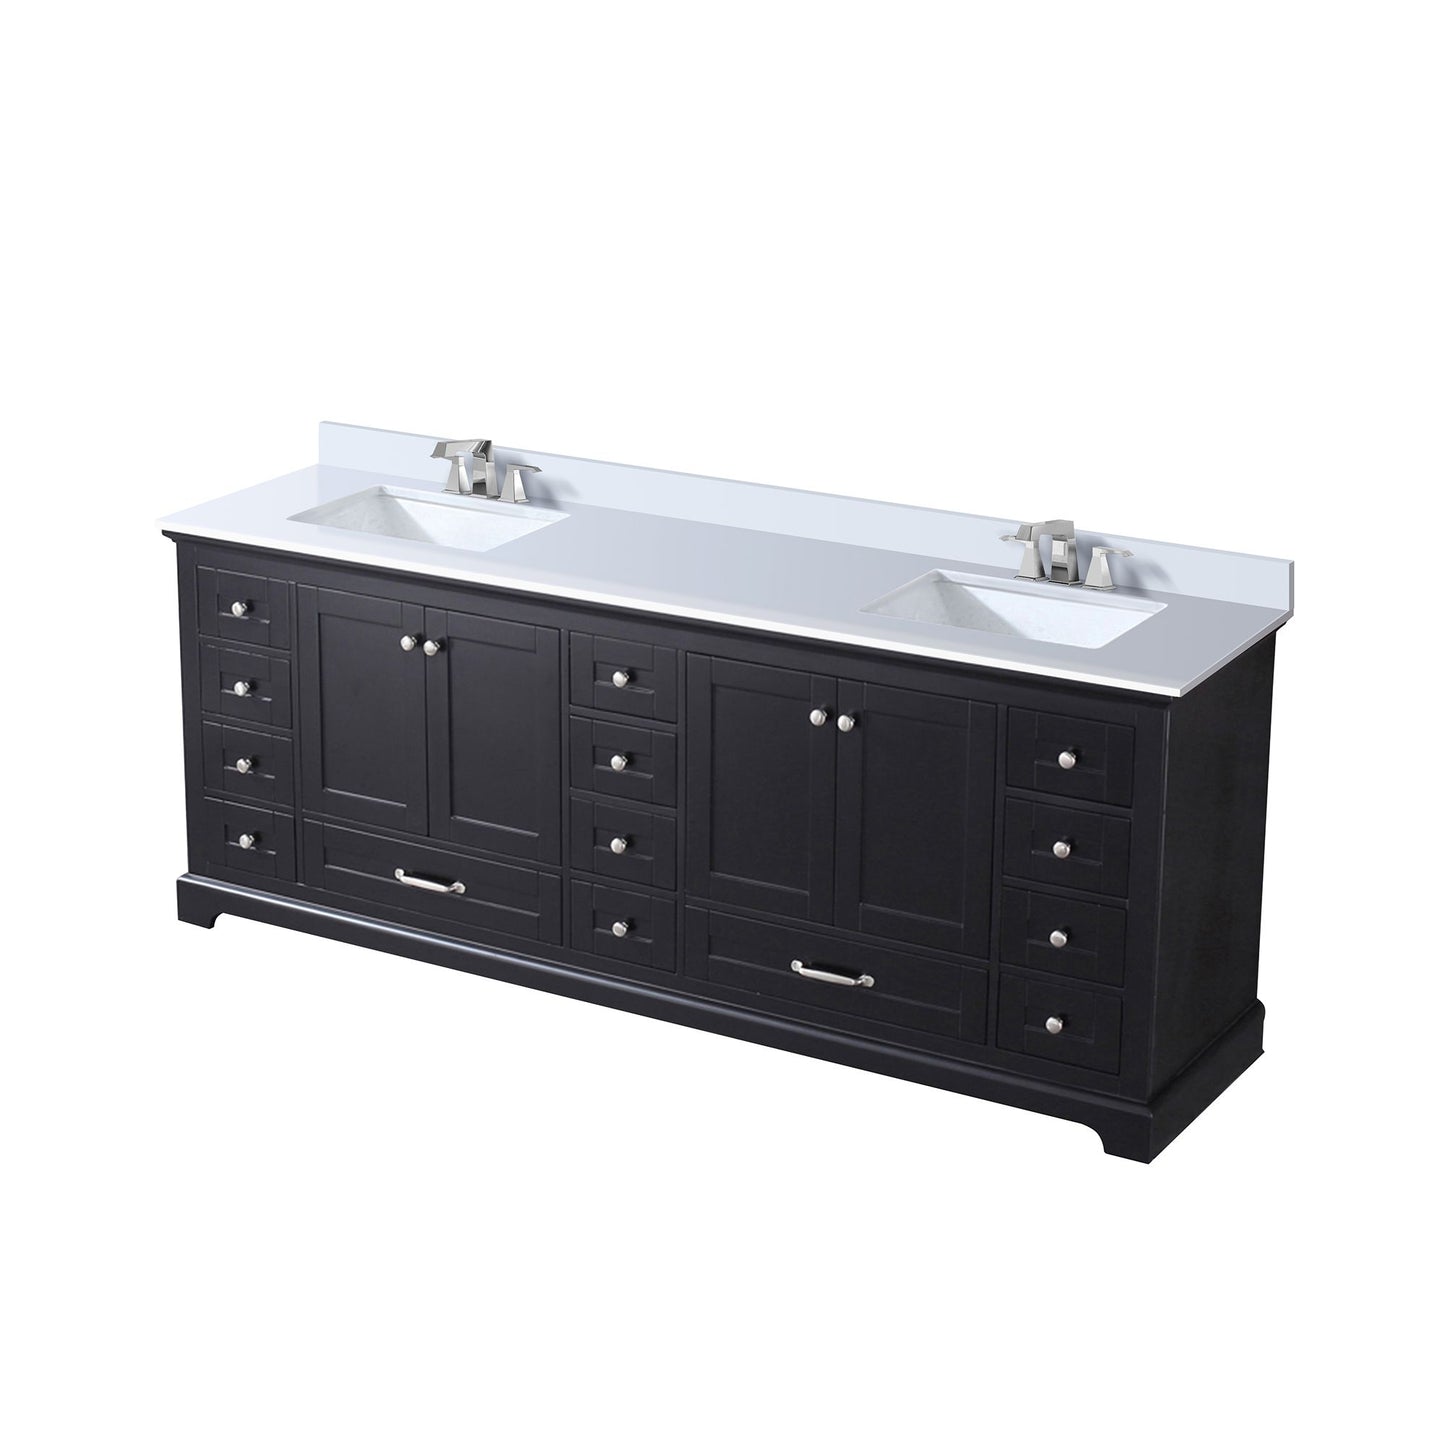 Lexora Collection Dukes 84 inch Double Bath Vanity, White Quartz Top, and Faucet Set - Luxe Bathroom Vanities